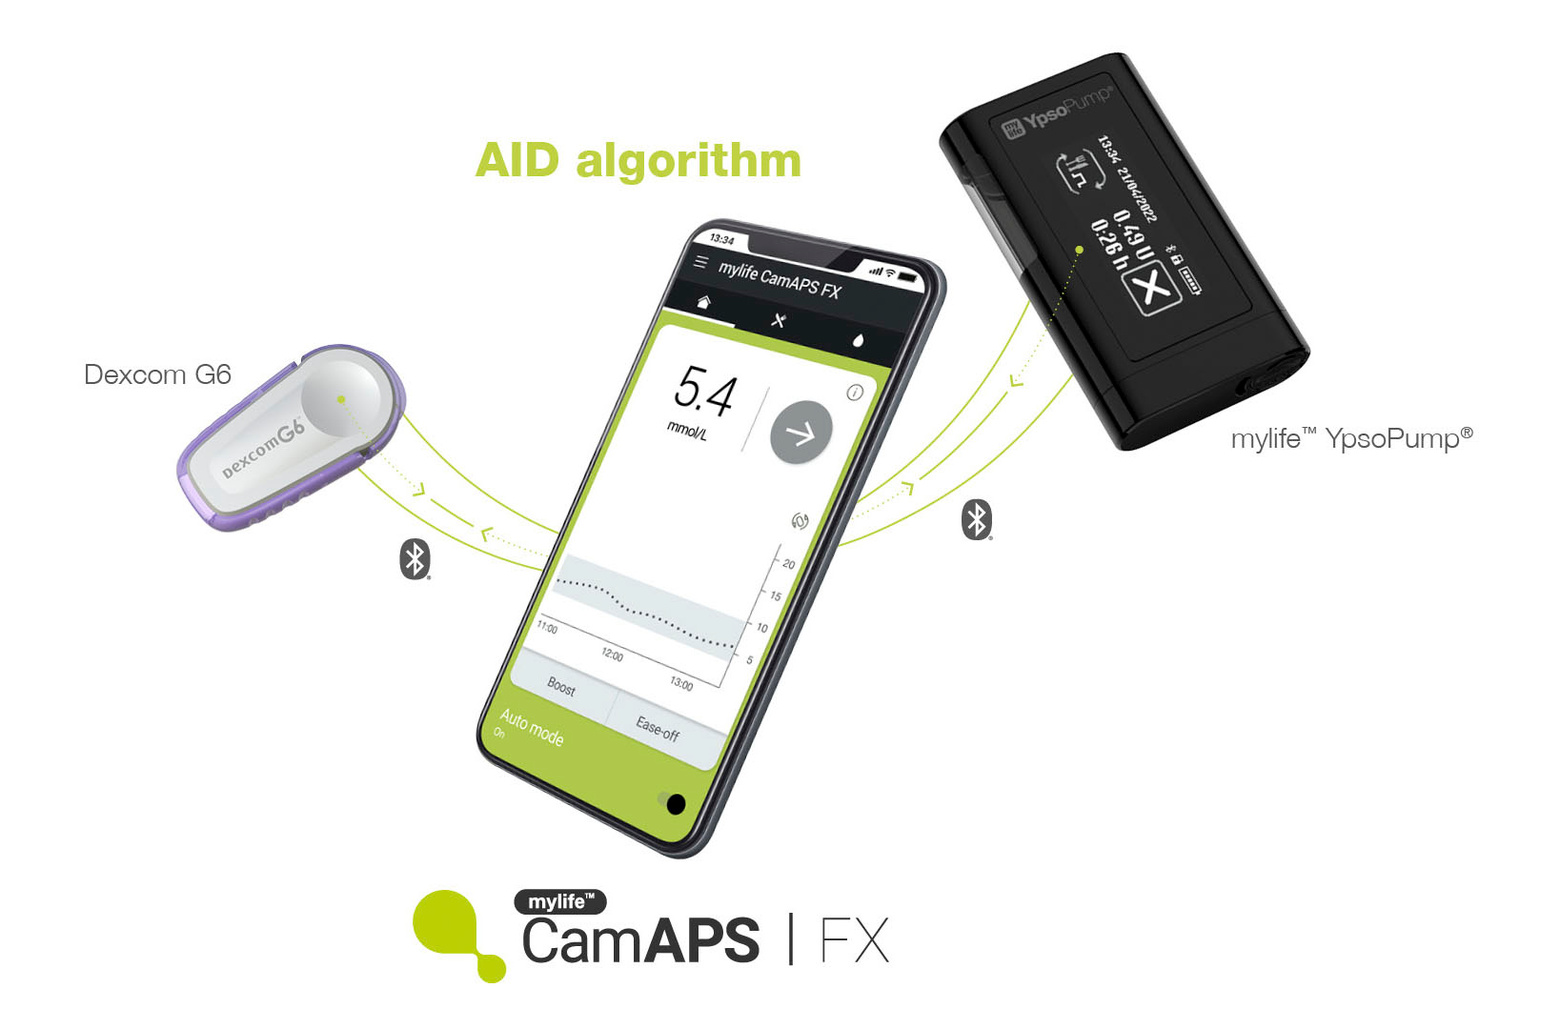 mylife YpsoPump CamAPS FX mit Dexcom G6 Starter Kit mg/dl